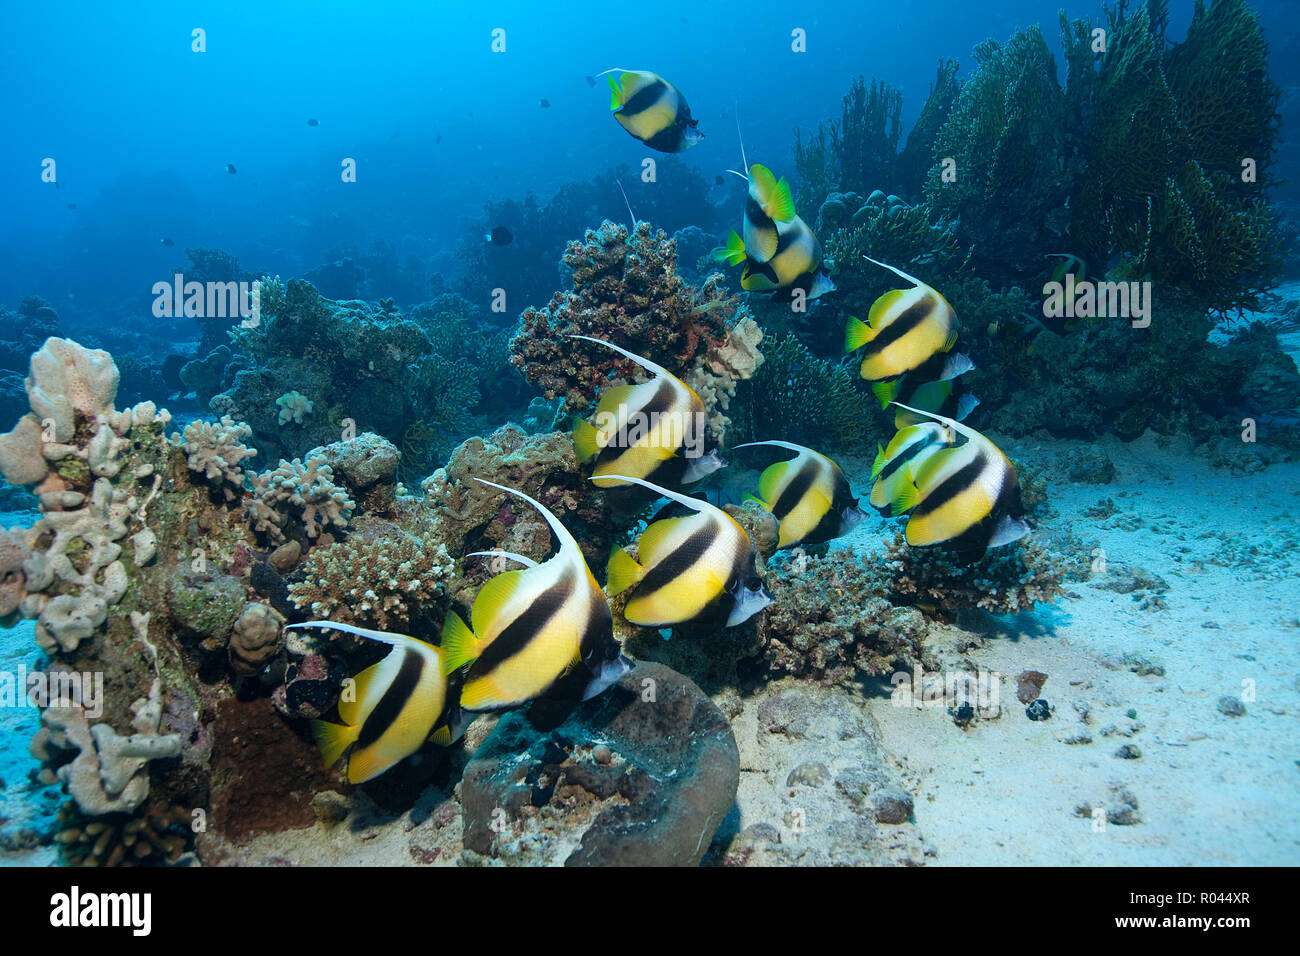 A group Red Sea bannerfish (Heniochus intermedius), Sinai, Egypt Stock Photo